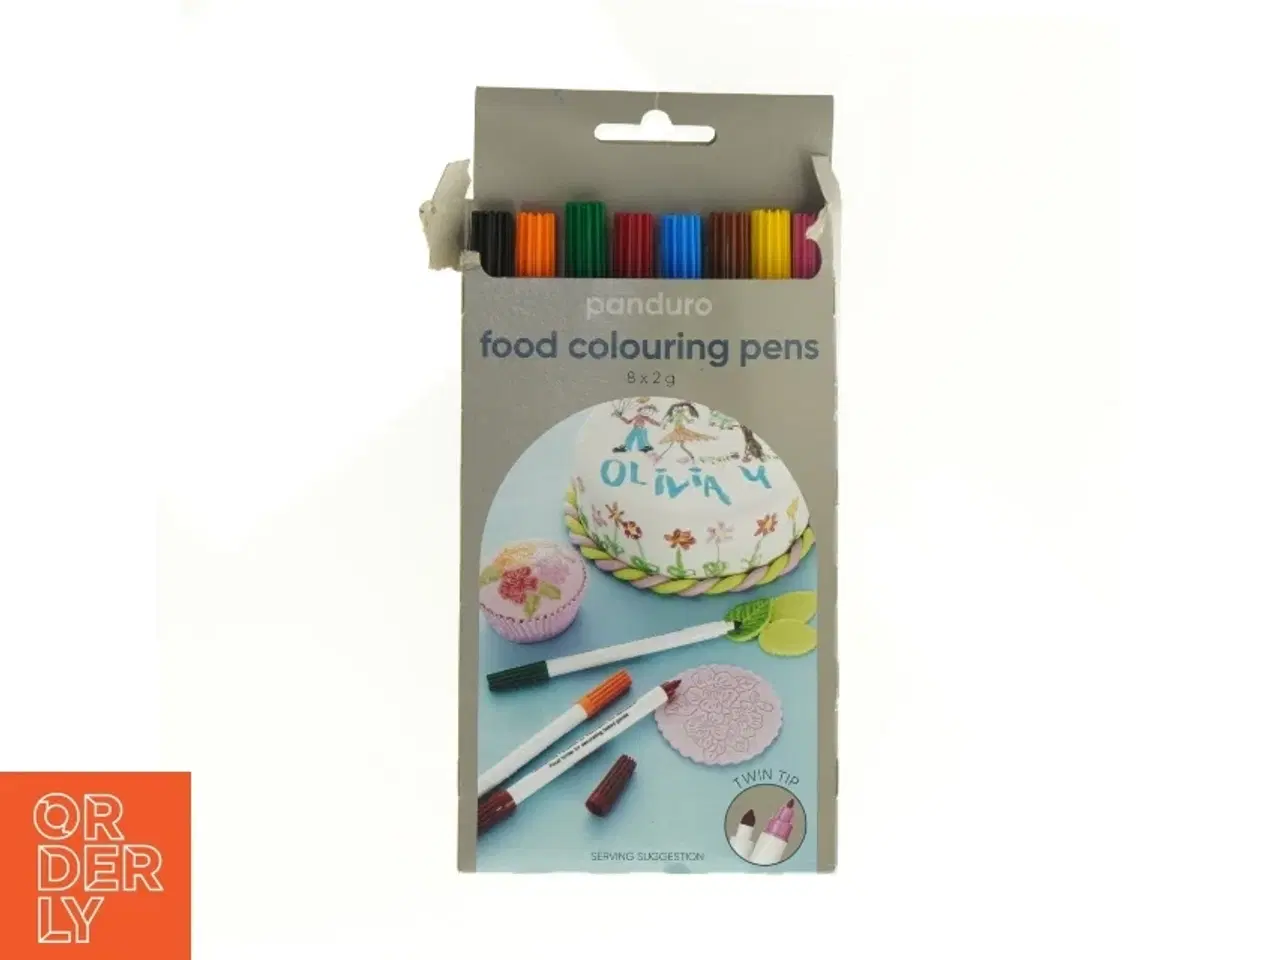 Billede 1 - Food coloring pens fra Panduro (str. 17 x 10 cm)